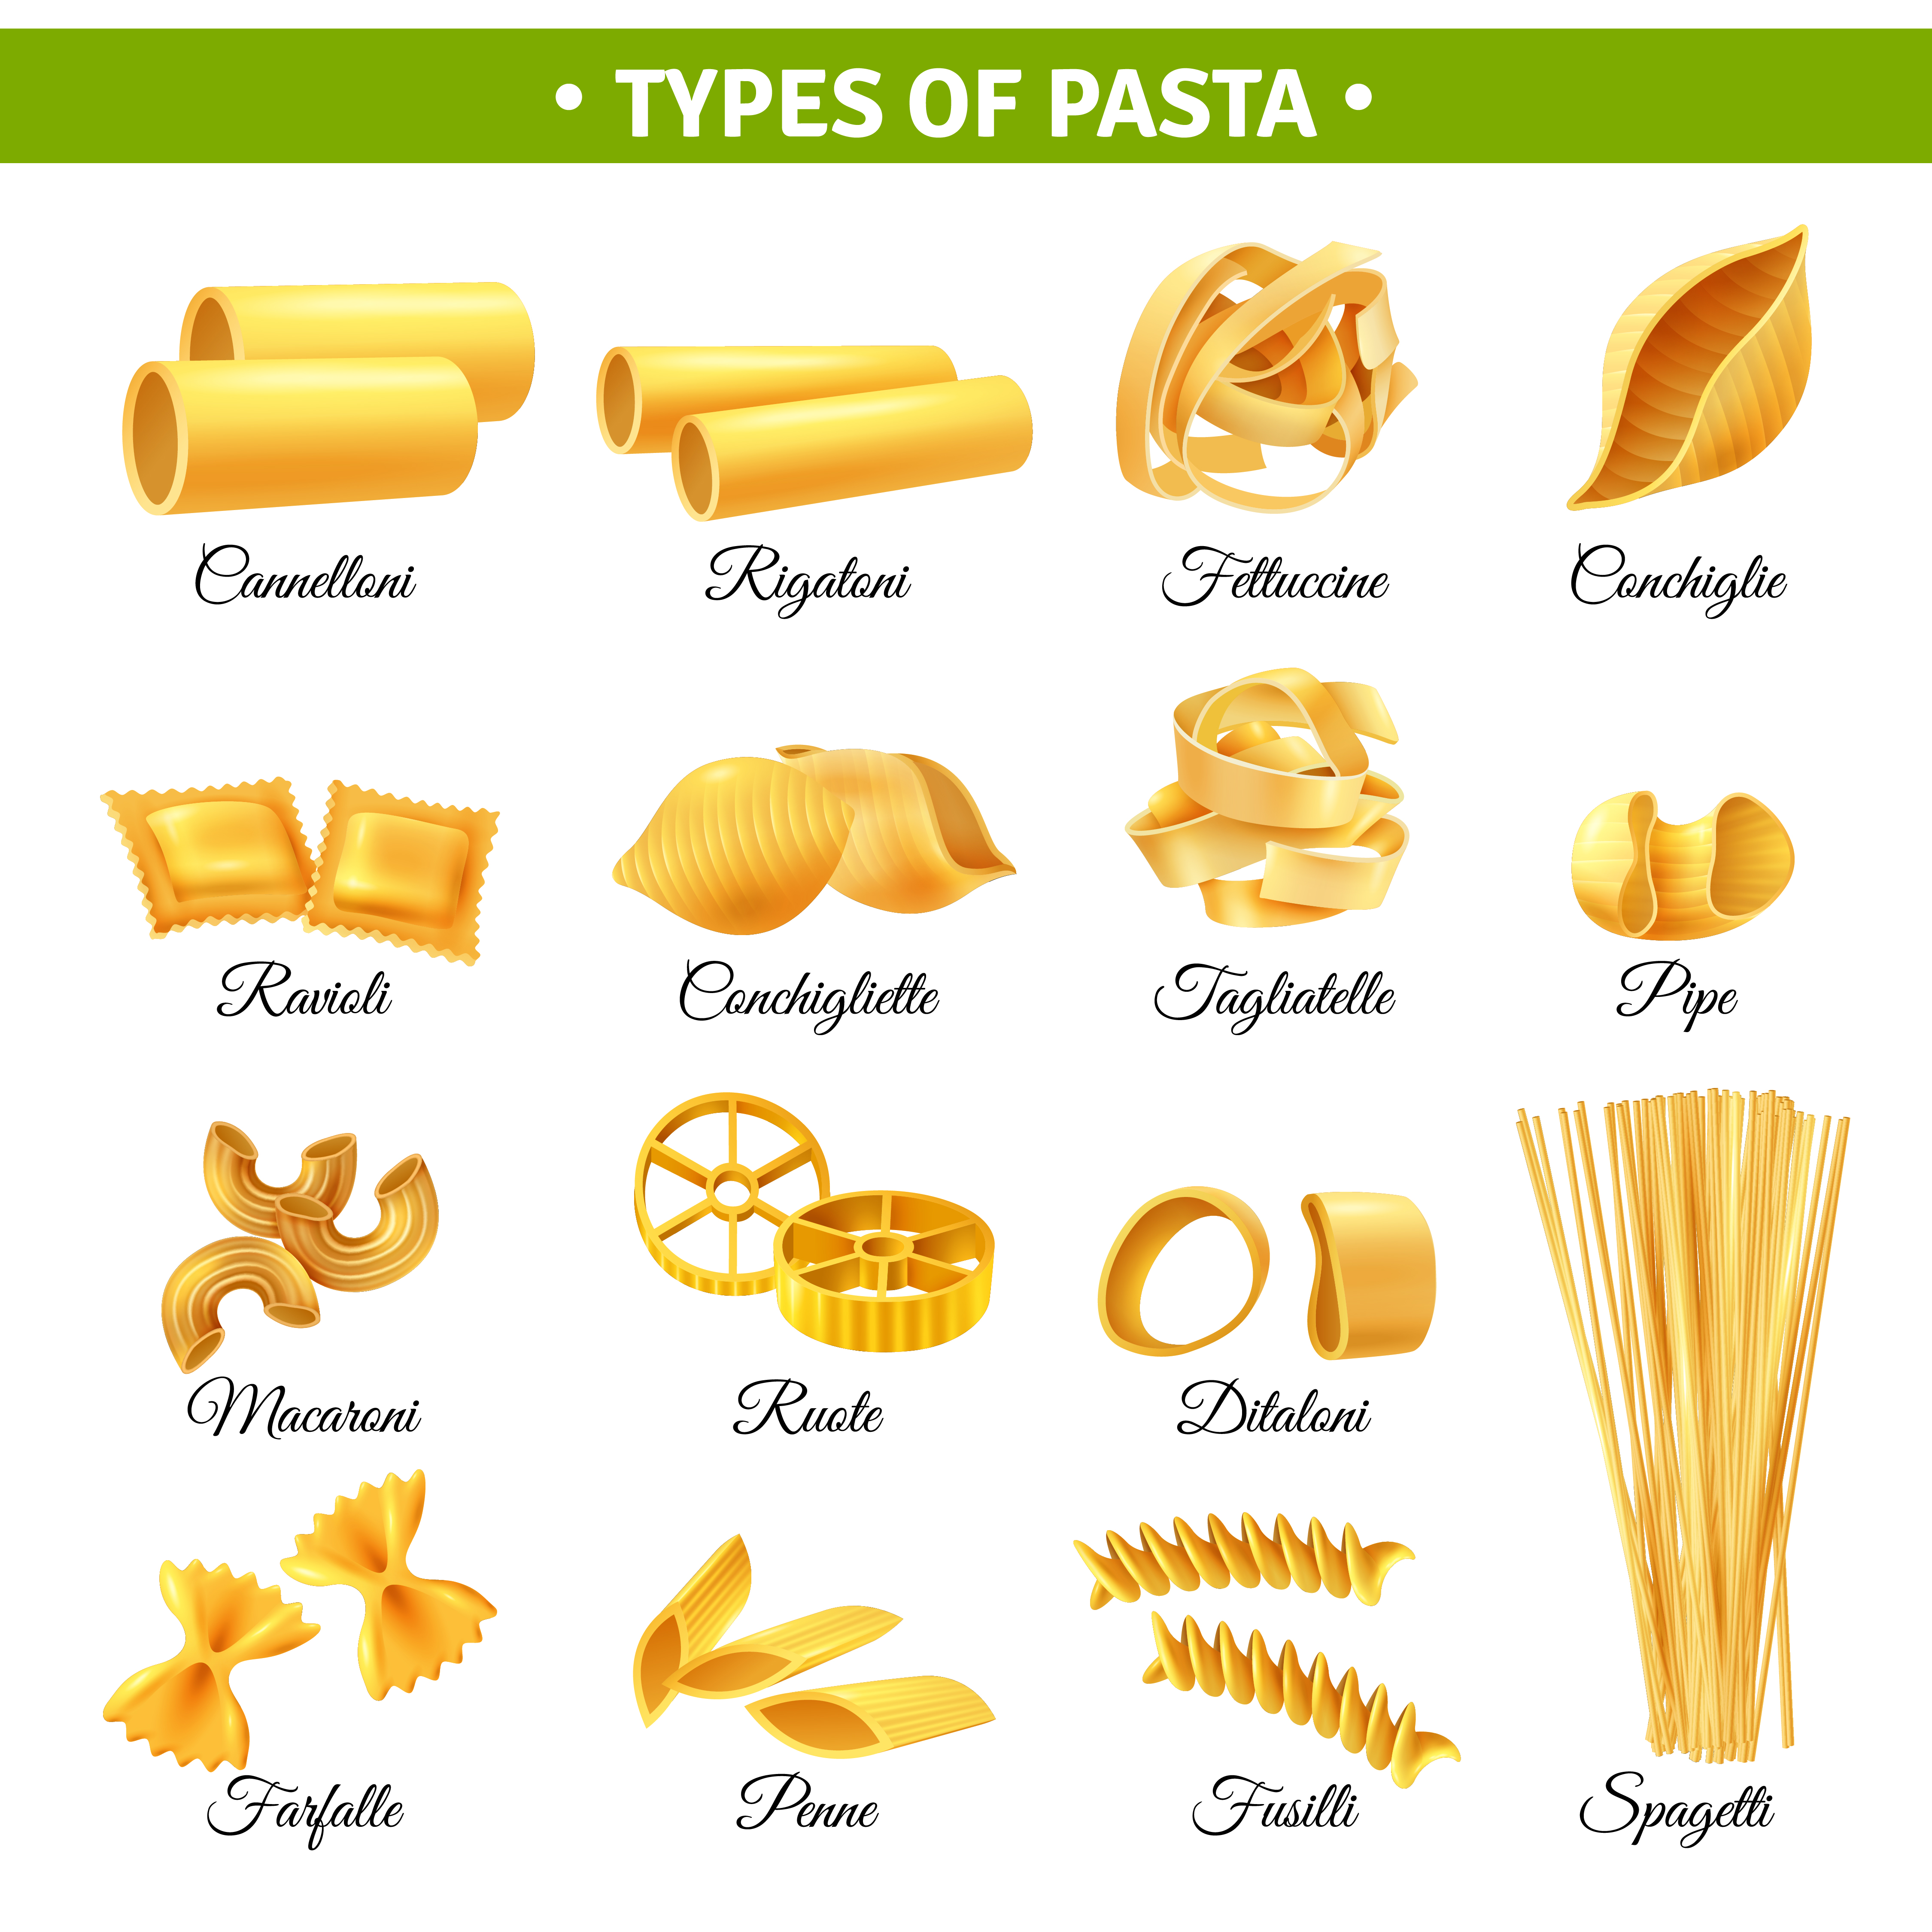 pasta shapes and names